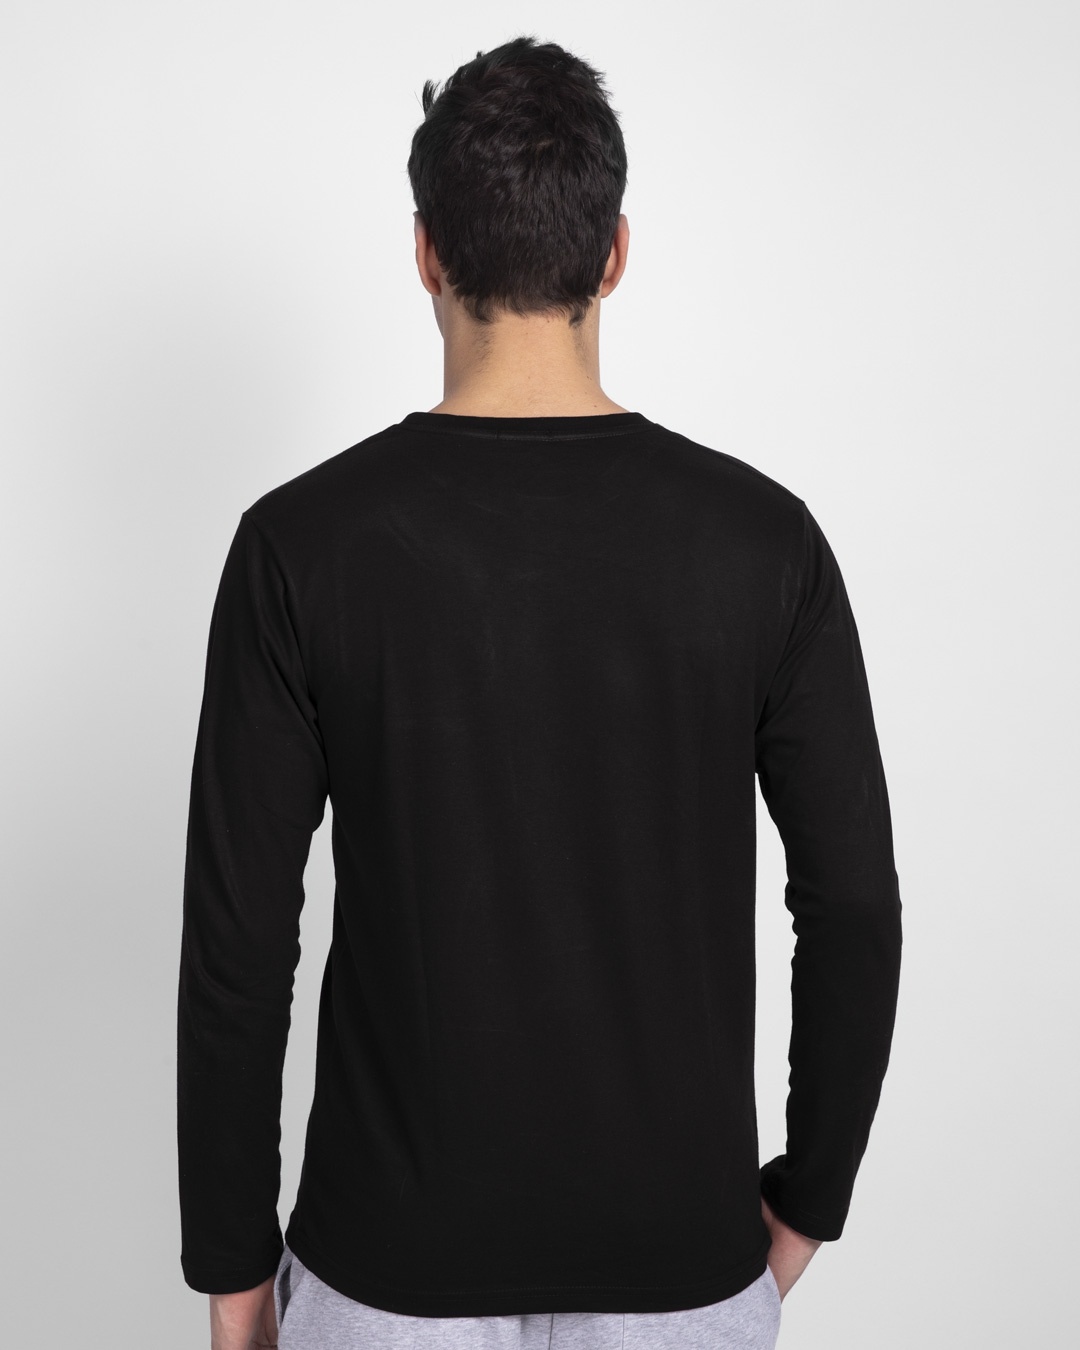 Shop Friends Logo Full Sleeve T-Shirt (FRL)-Back